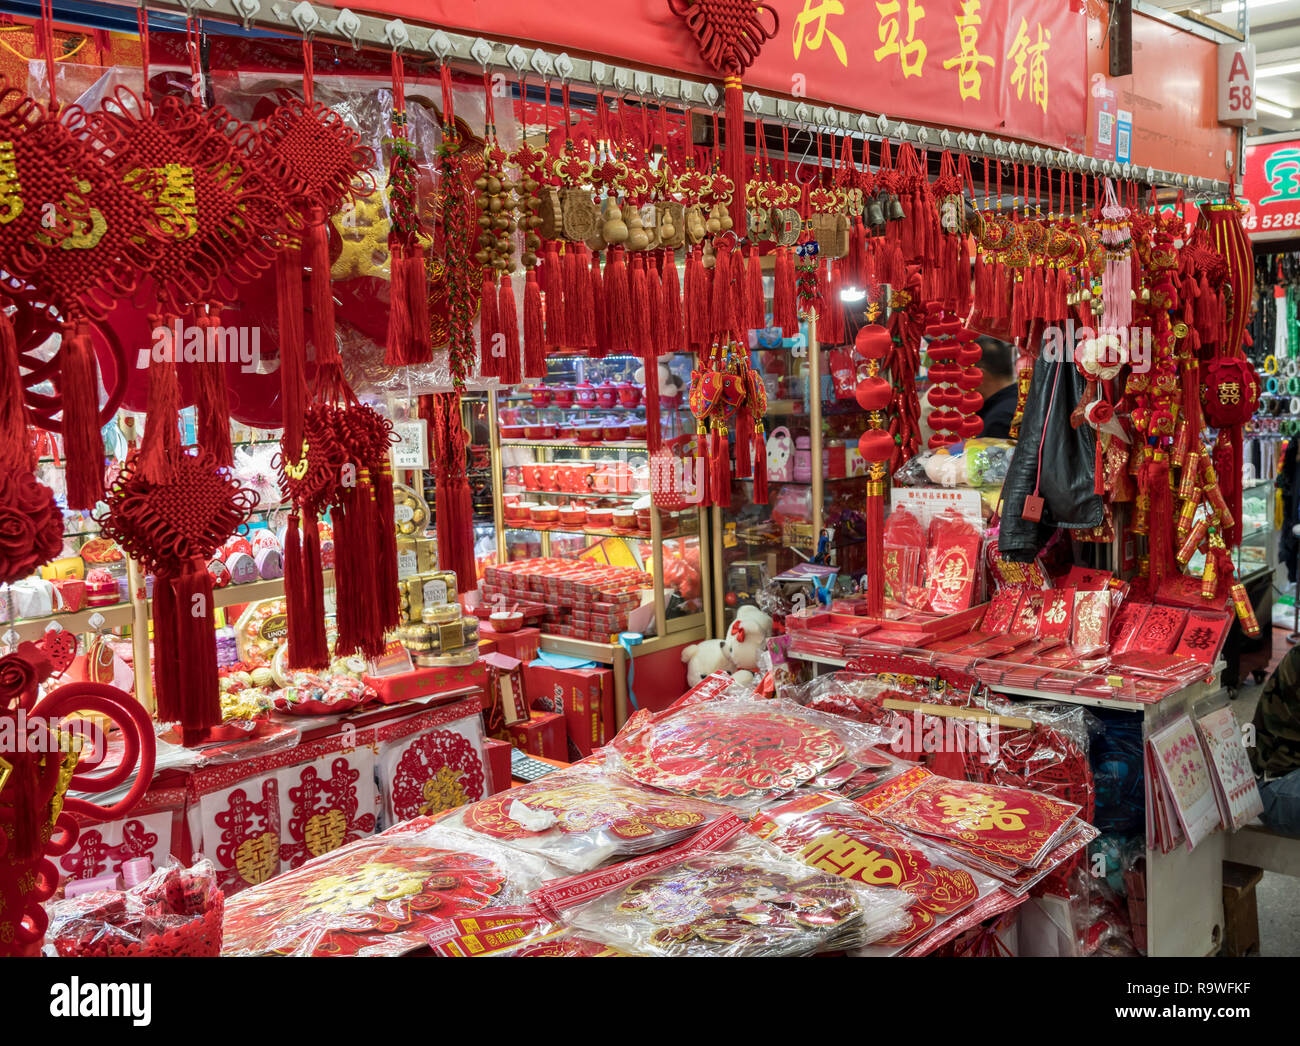 China Hong Kong Chinese Lunar New Year decoration in shopping Mall